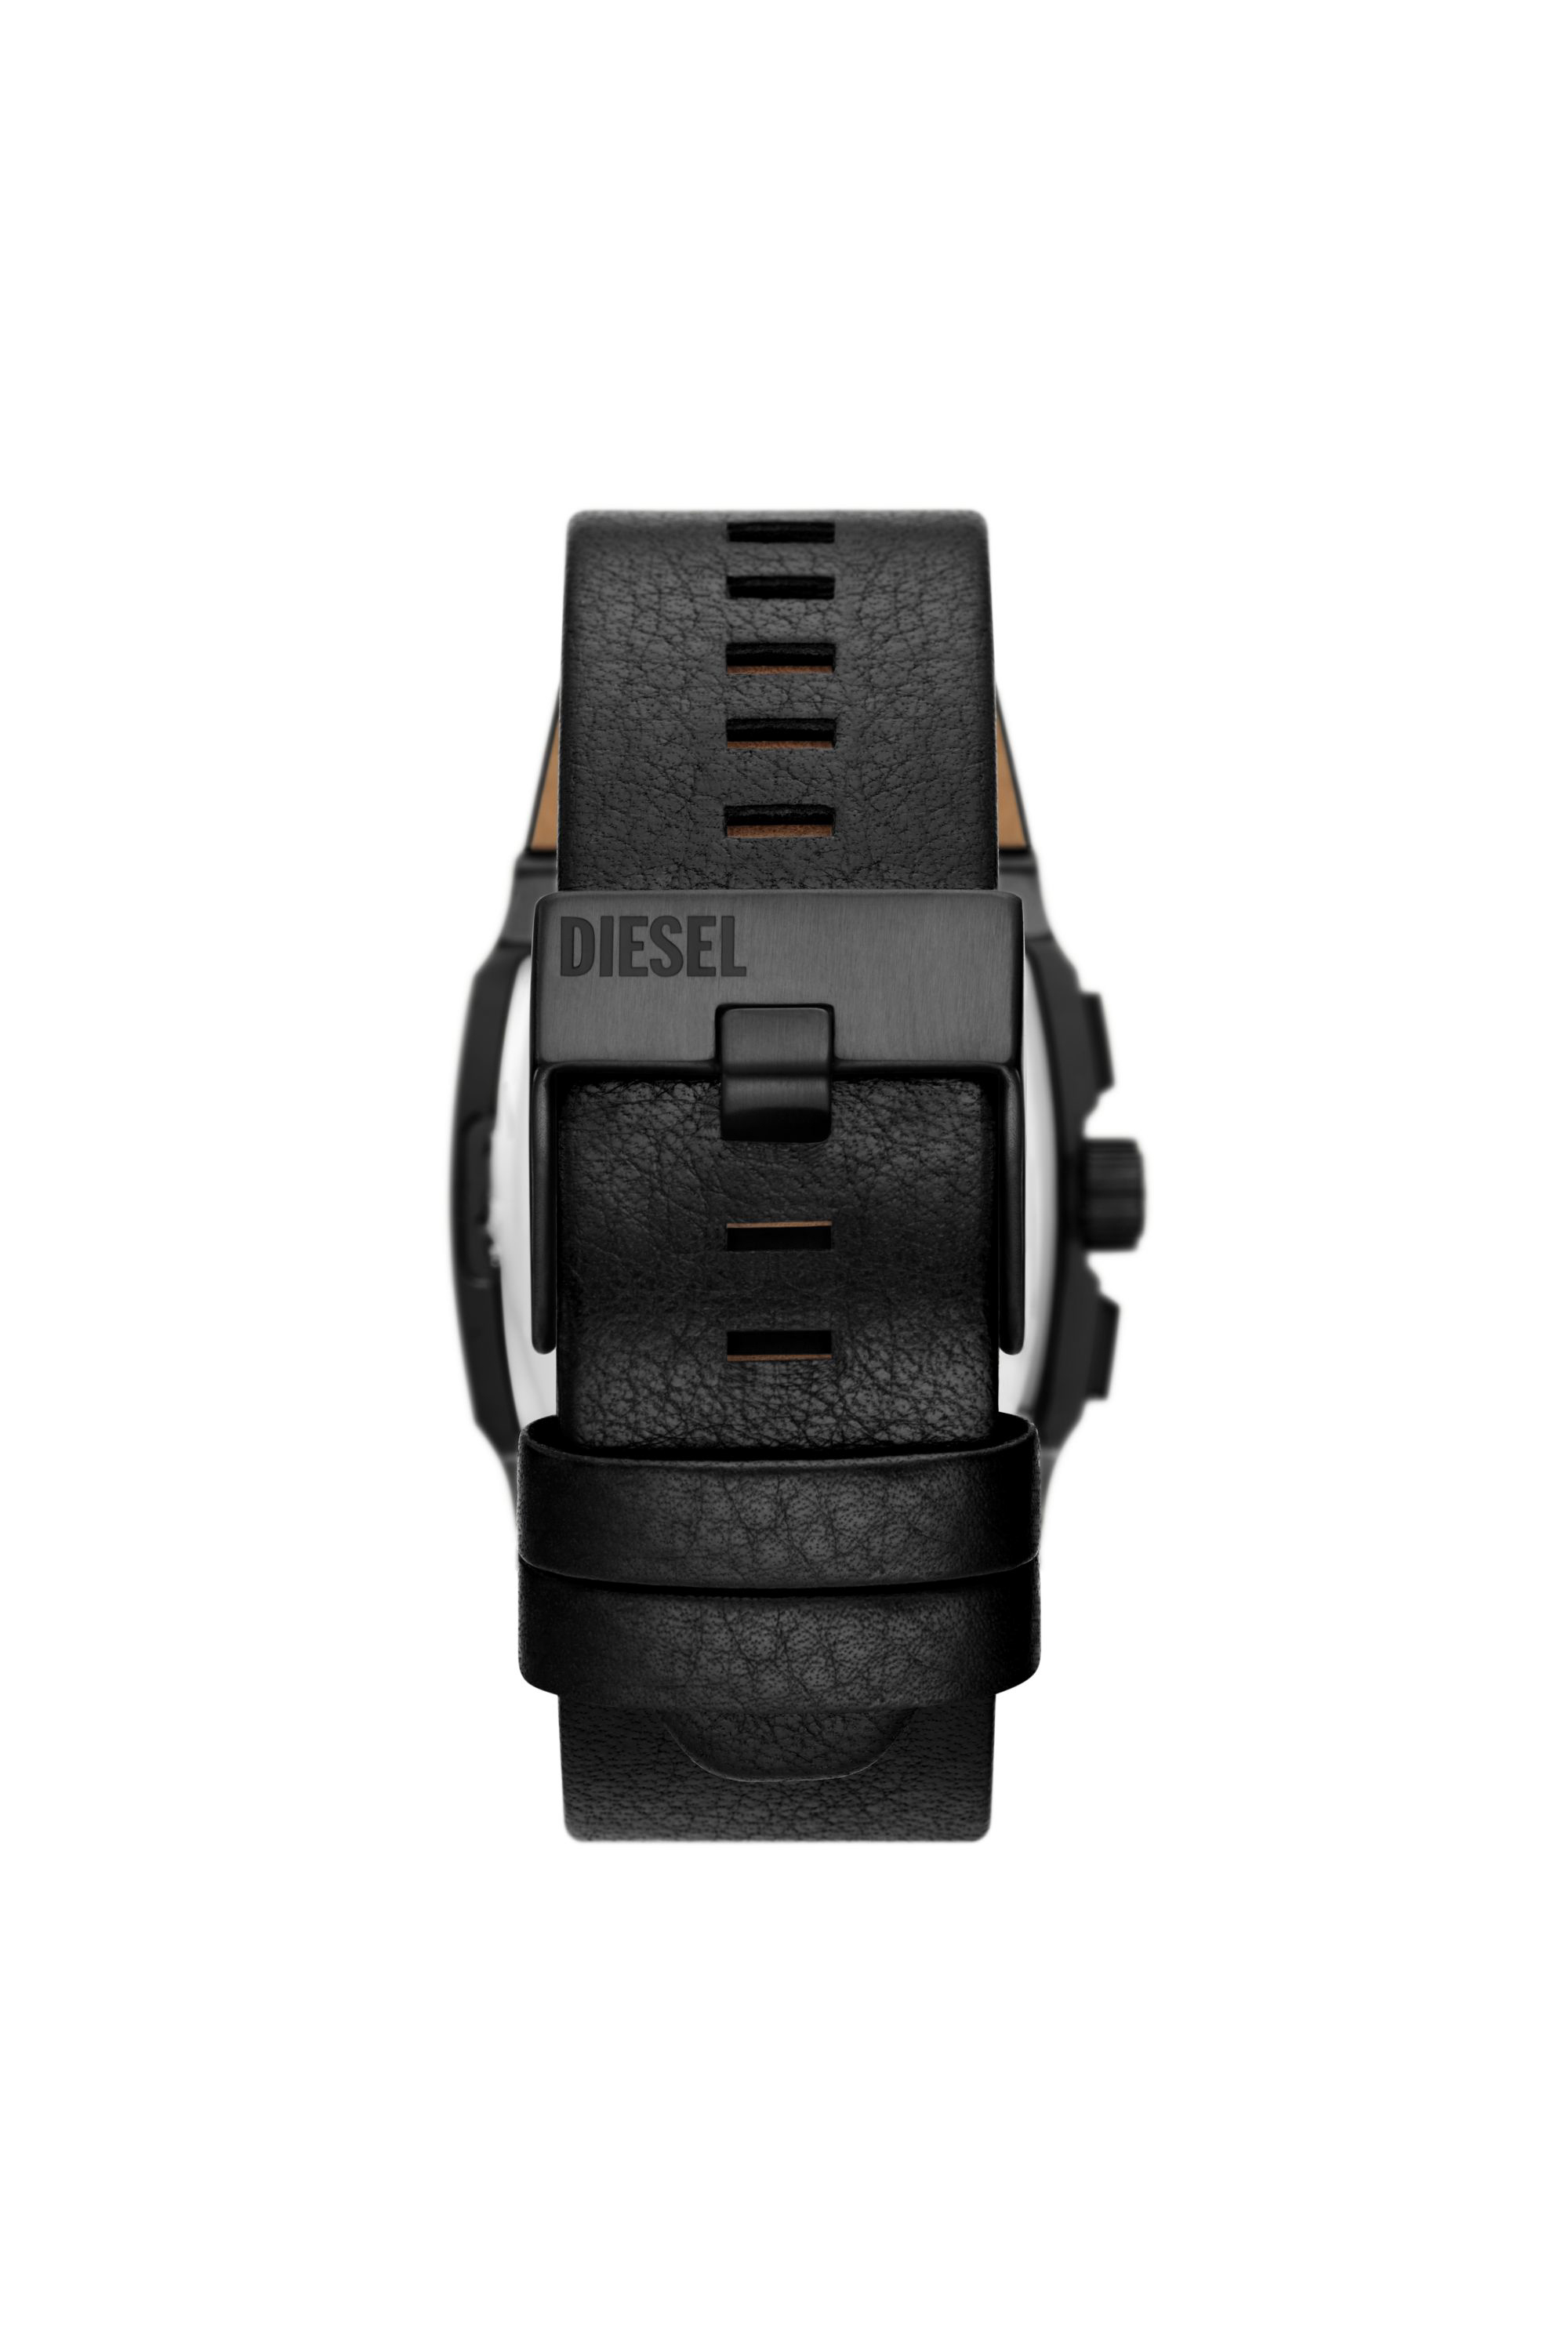 Diesel - DZ4645, Homme Montre chronographe Cliffhanger en cuir noir in Noir - Image 2